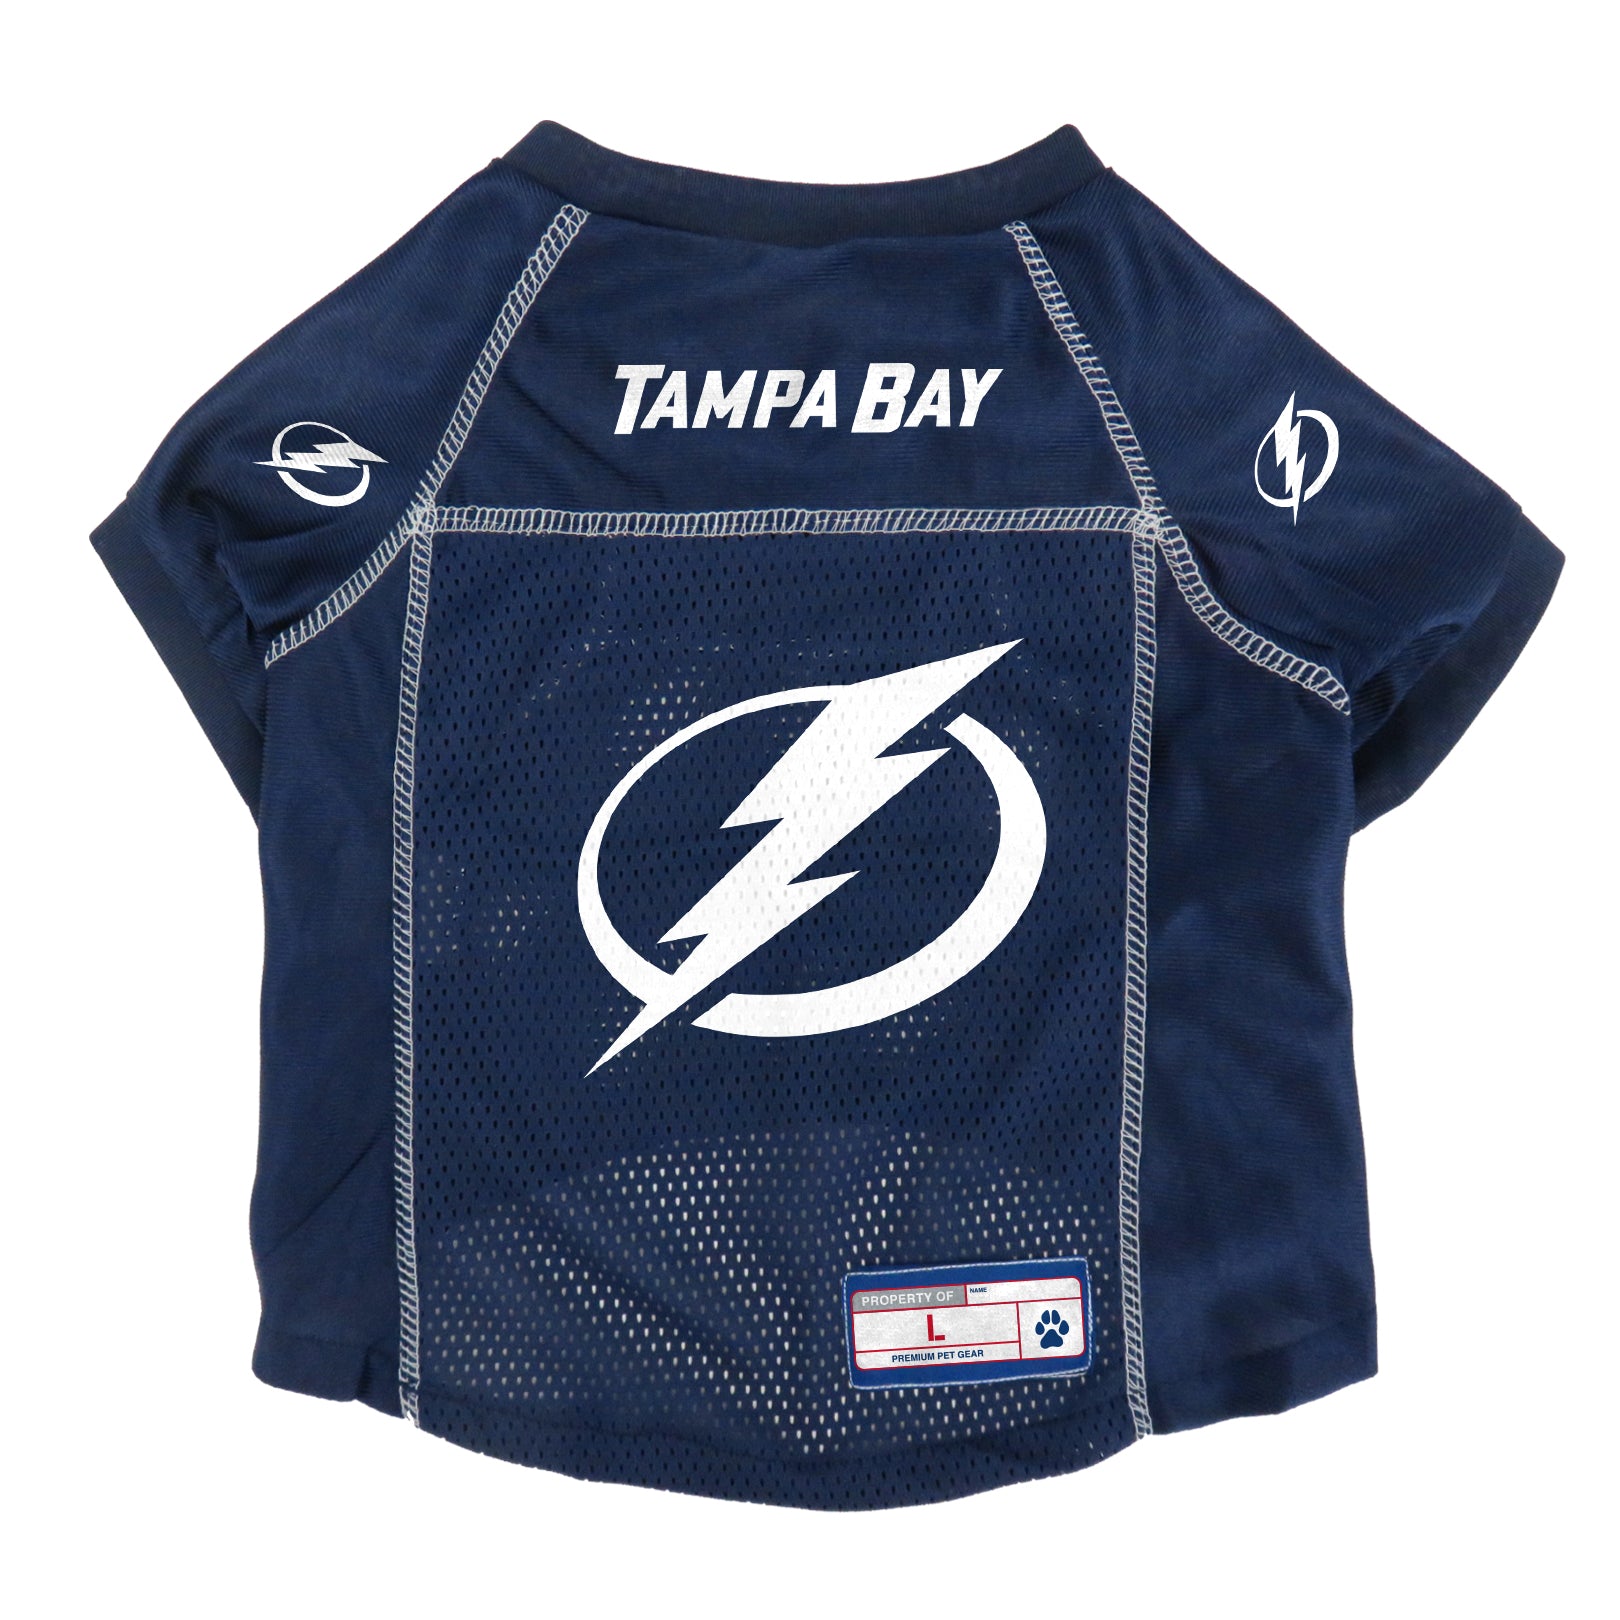 Tampa Bay Lightning Apparel, Tampa Bay Lightning Jerseys, Tampa